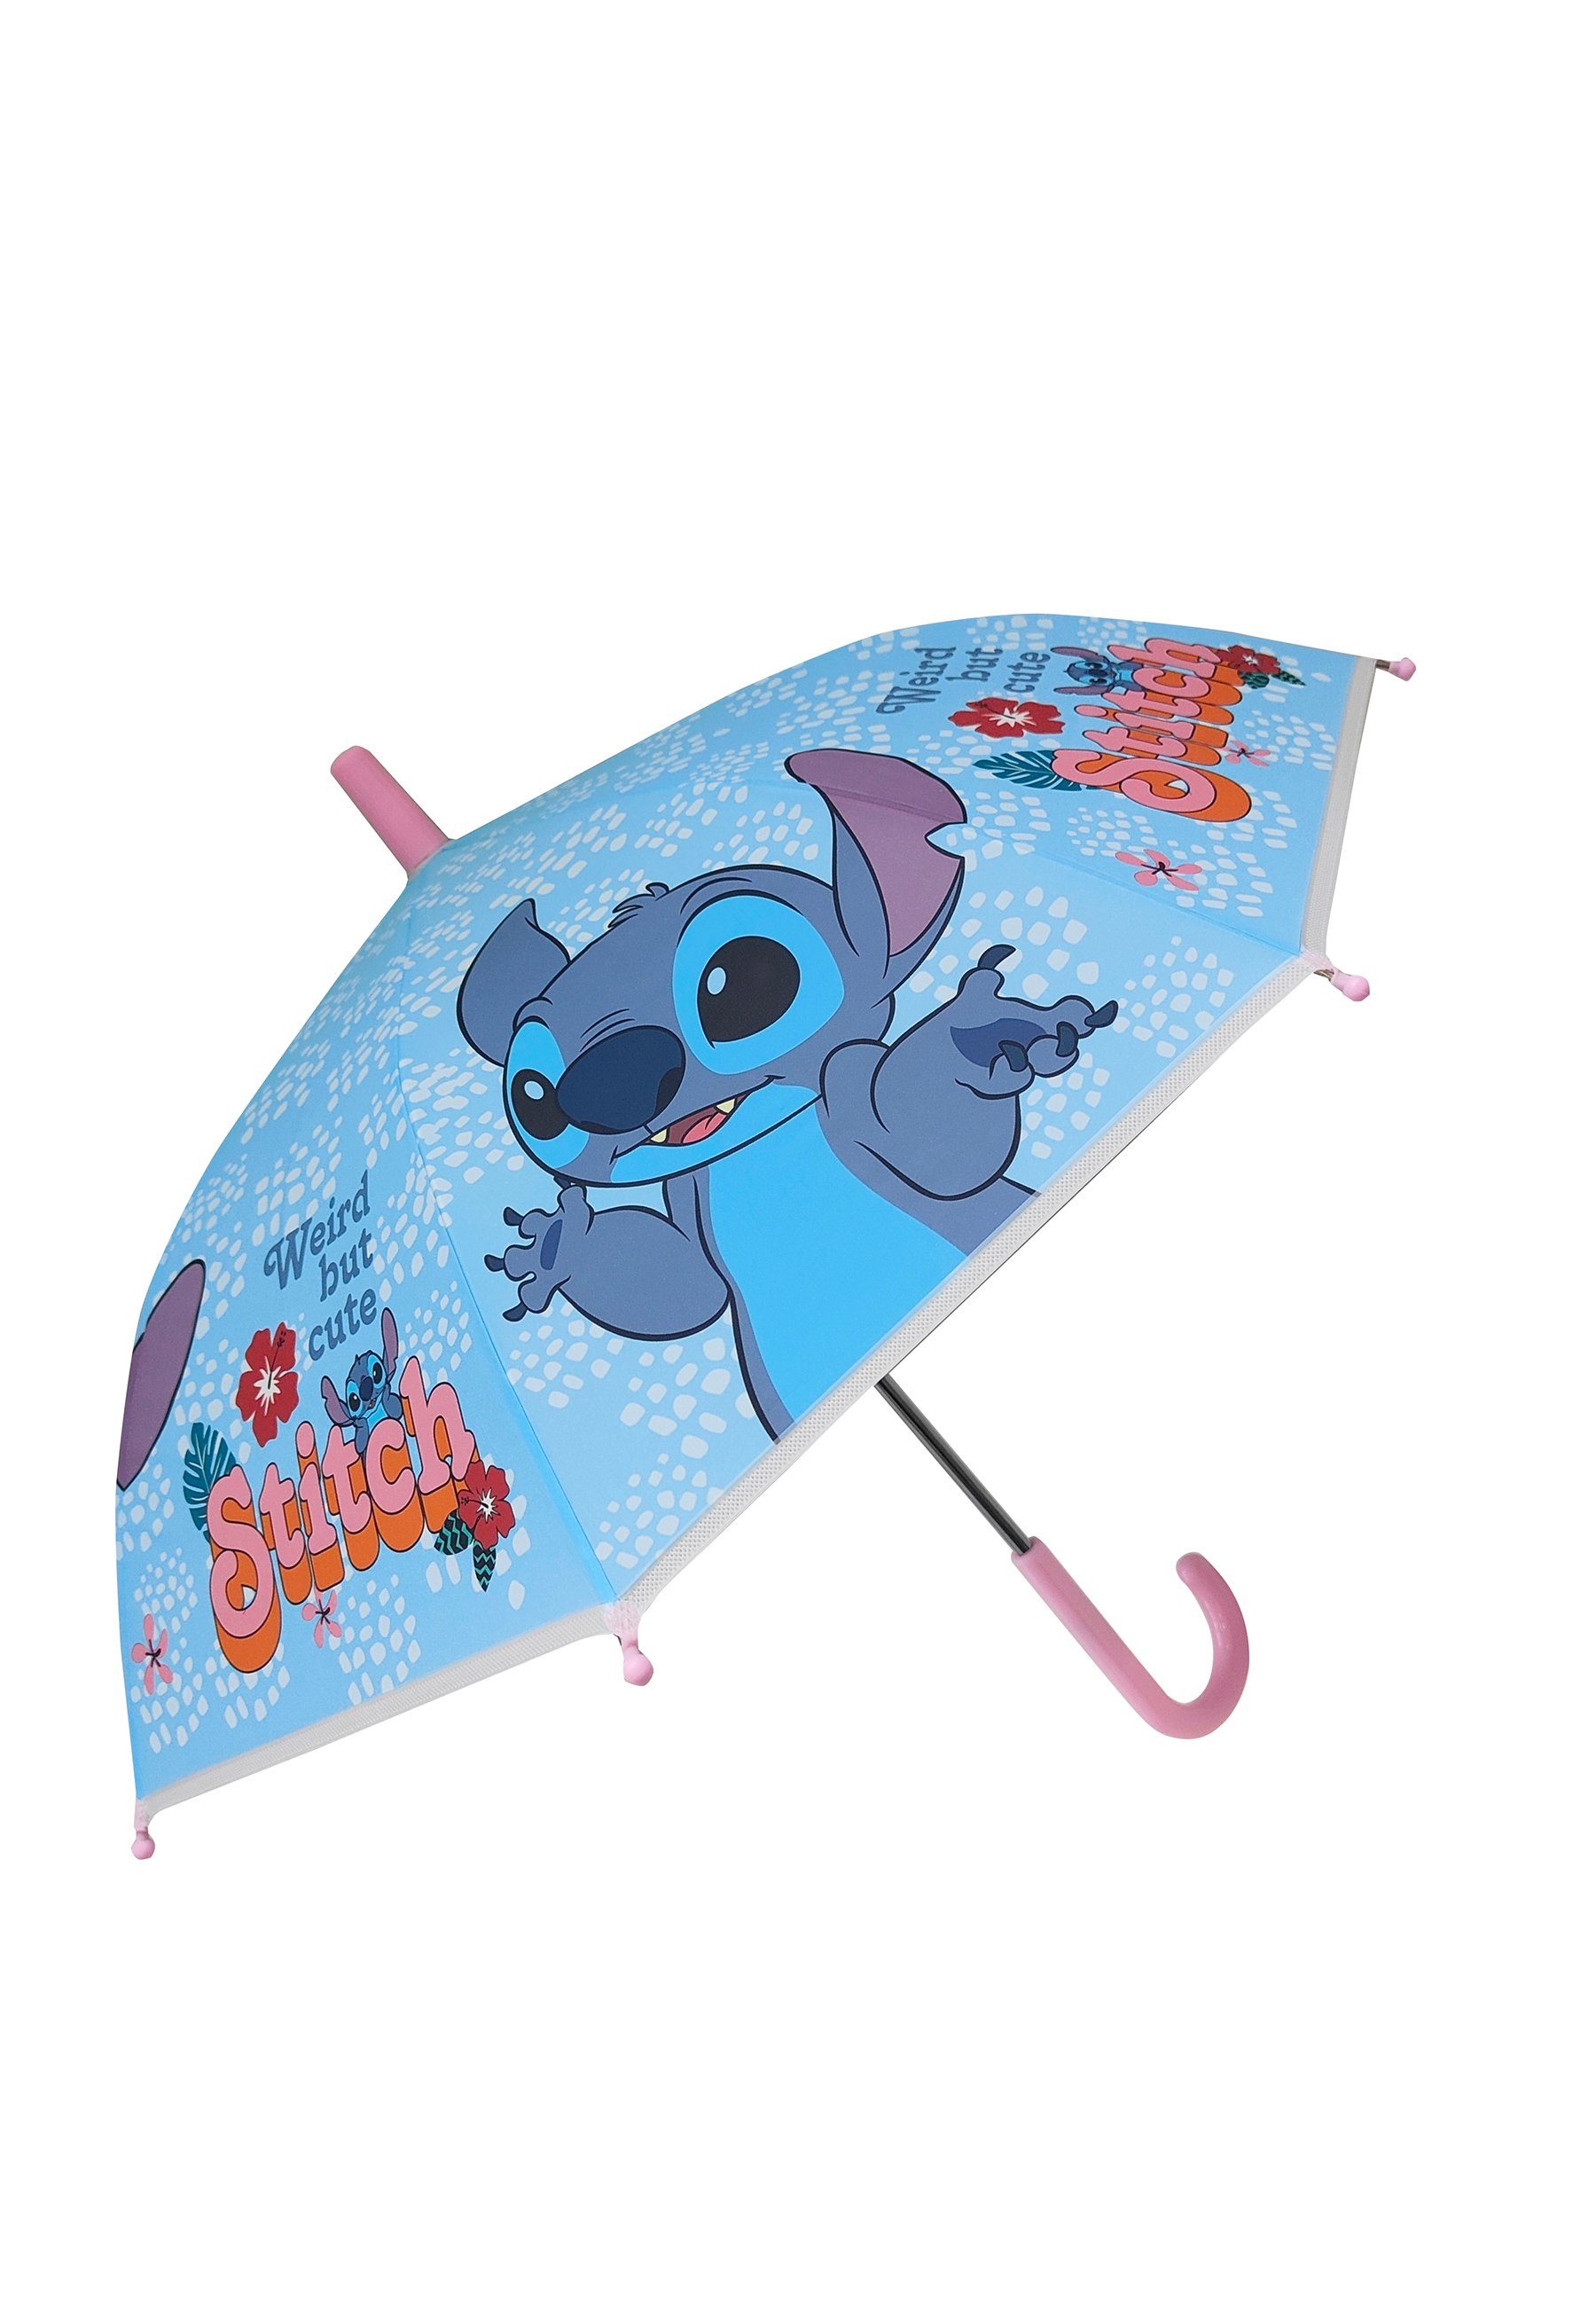 Stockregenschirm Kinder Stock-Schirm Stitch Regenschirm Kuppelschirm